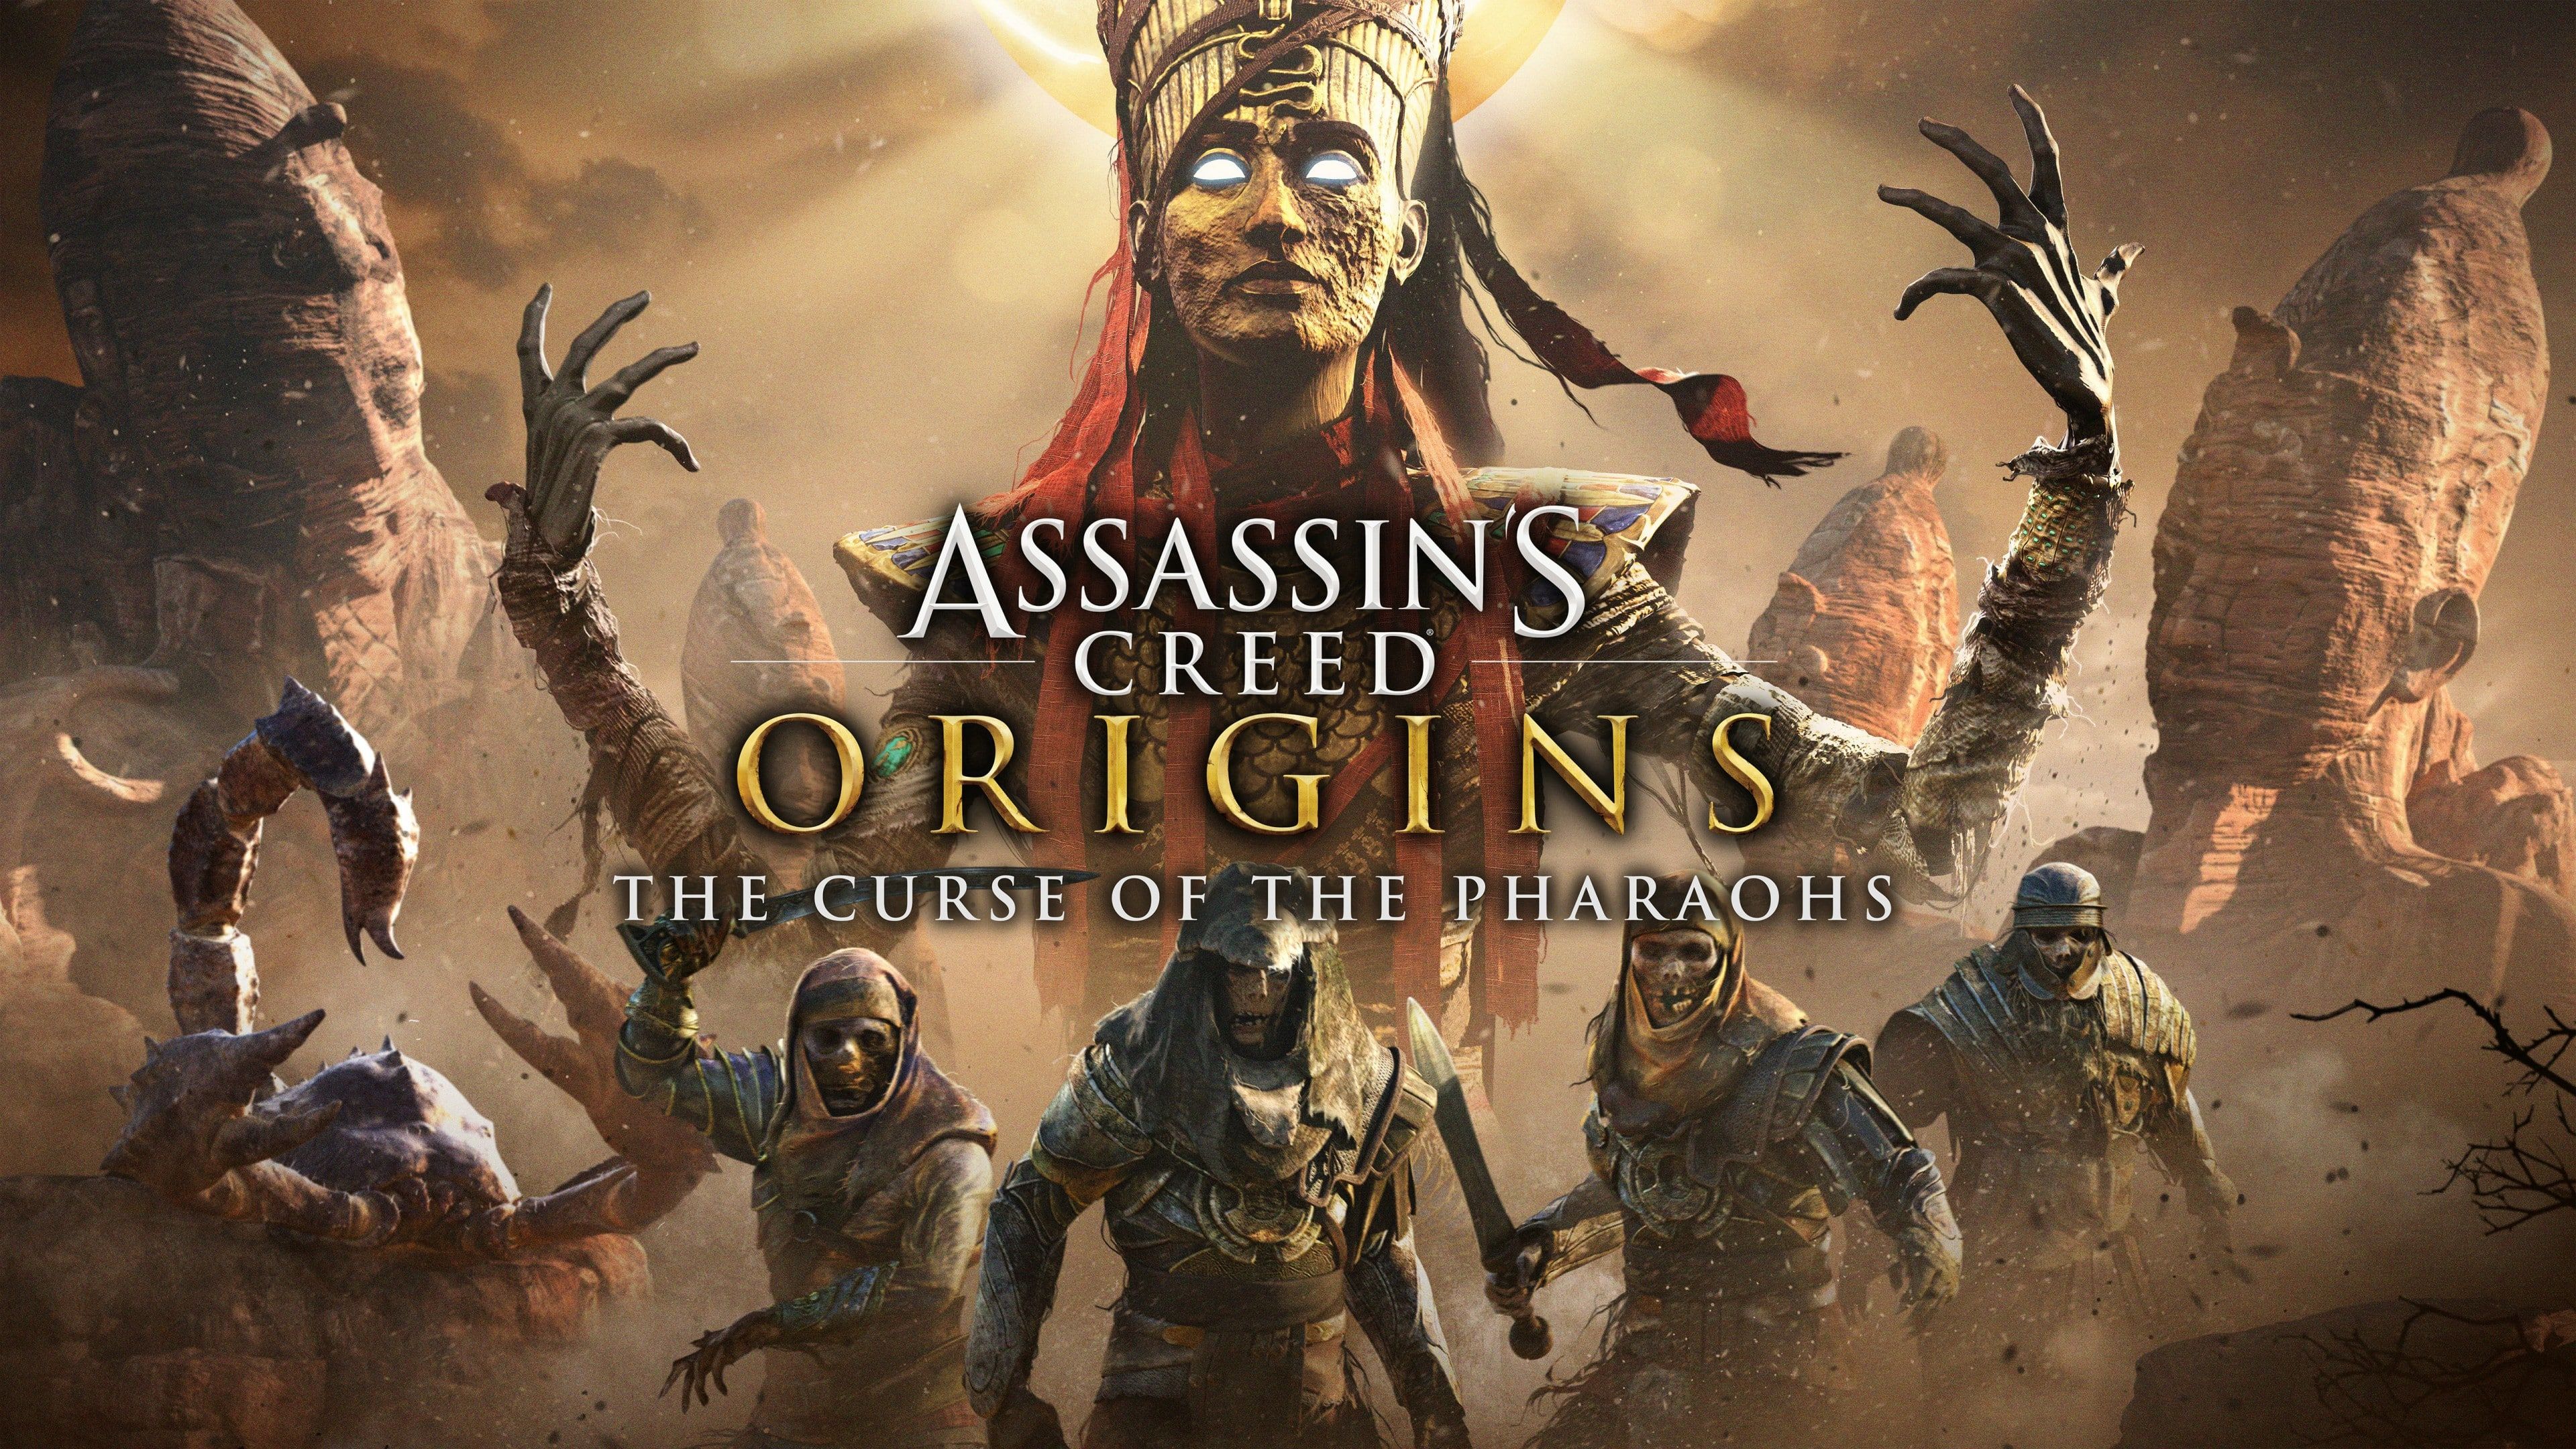 Assassins Creed Origins Curse Pharoahs. Assassins creed and Assassin